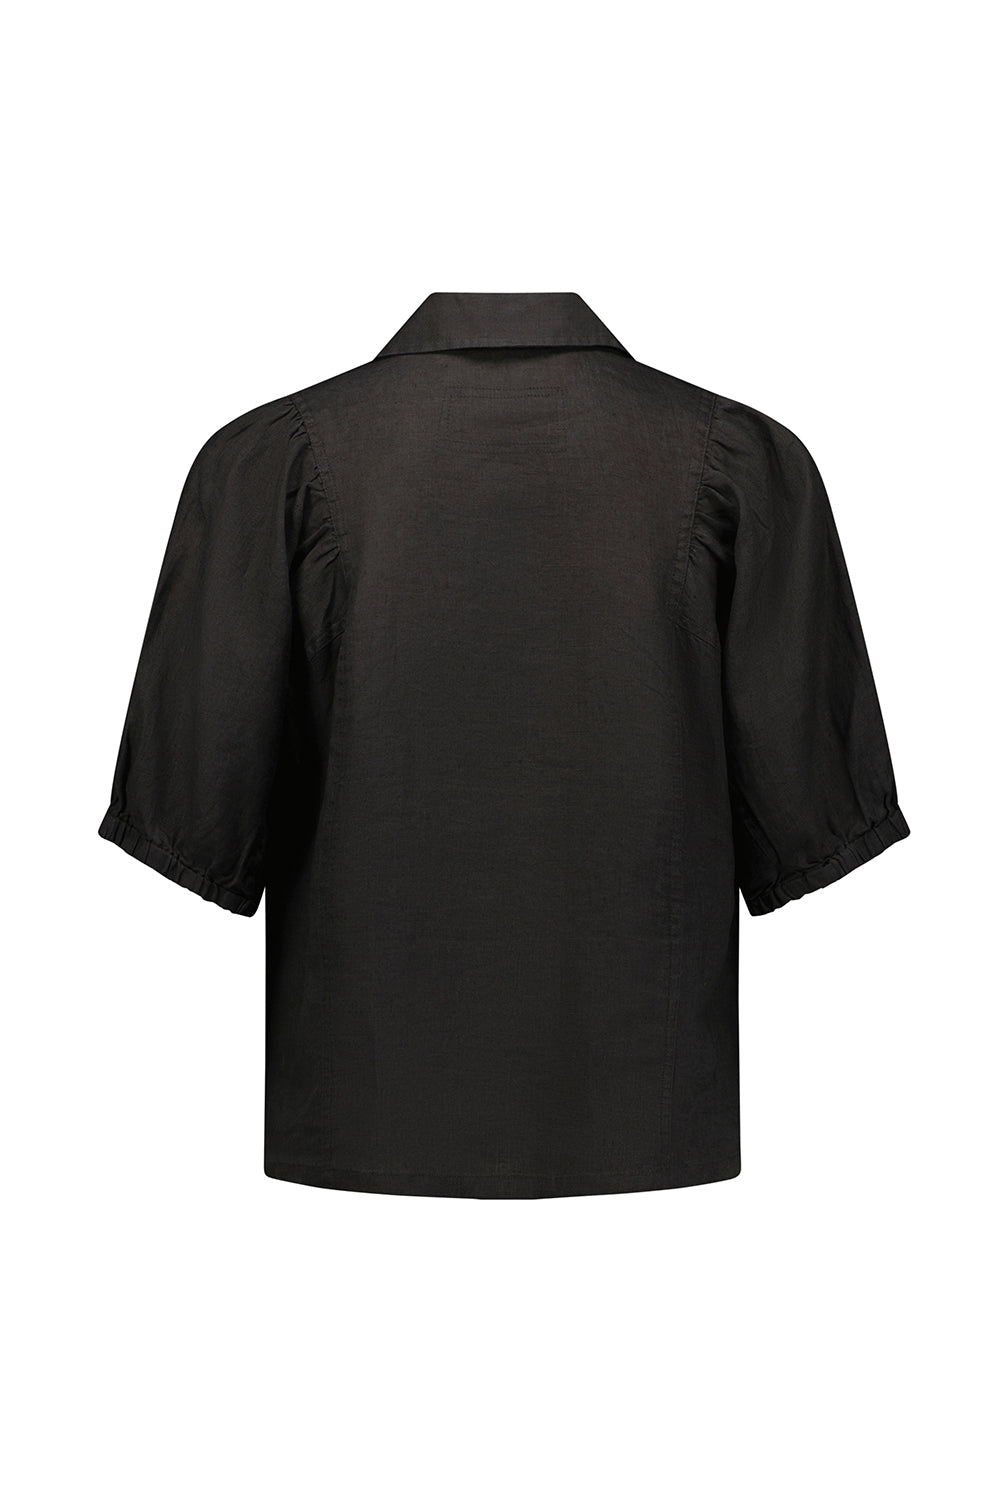 Adorn Shirt - Black - Shirt VERGE